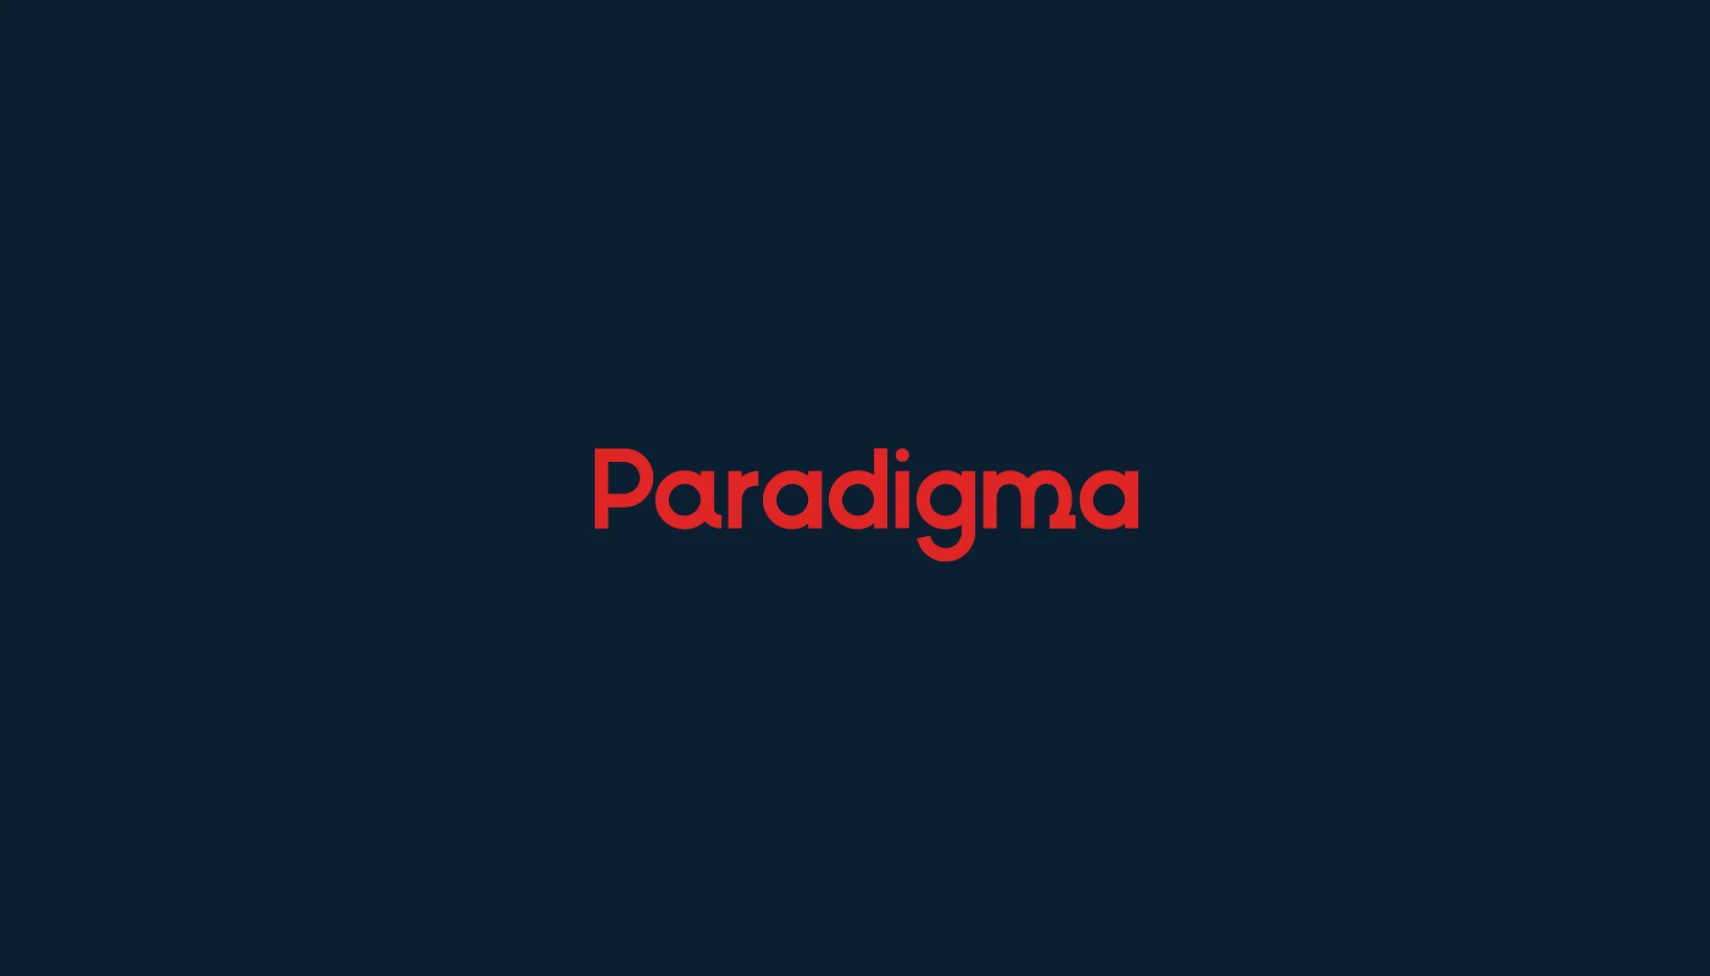 002_Portafolio_Paradigma_branding